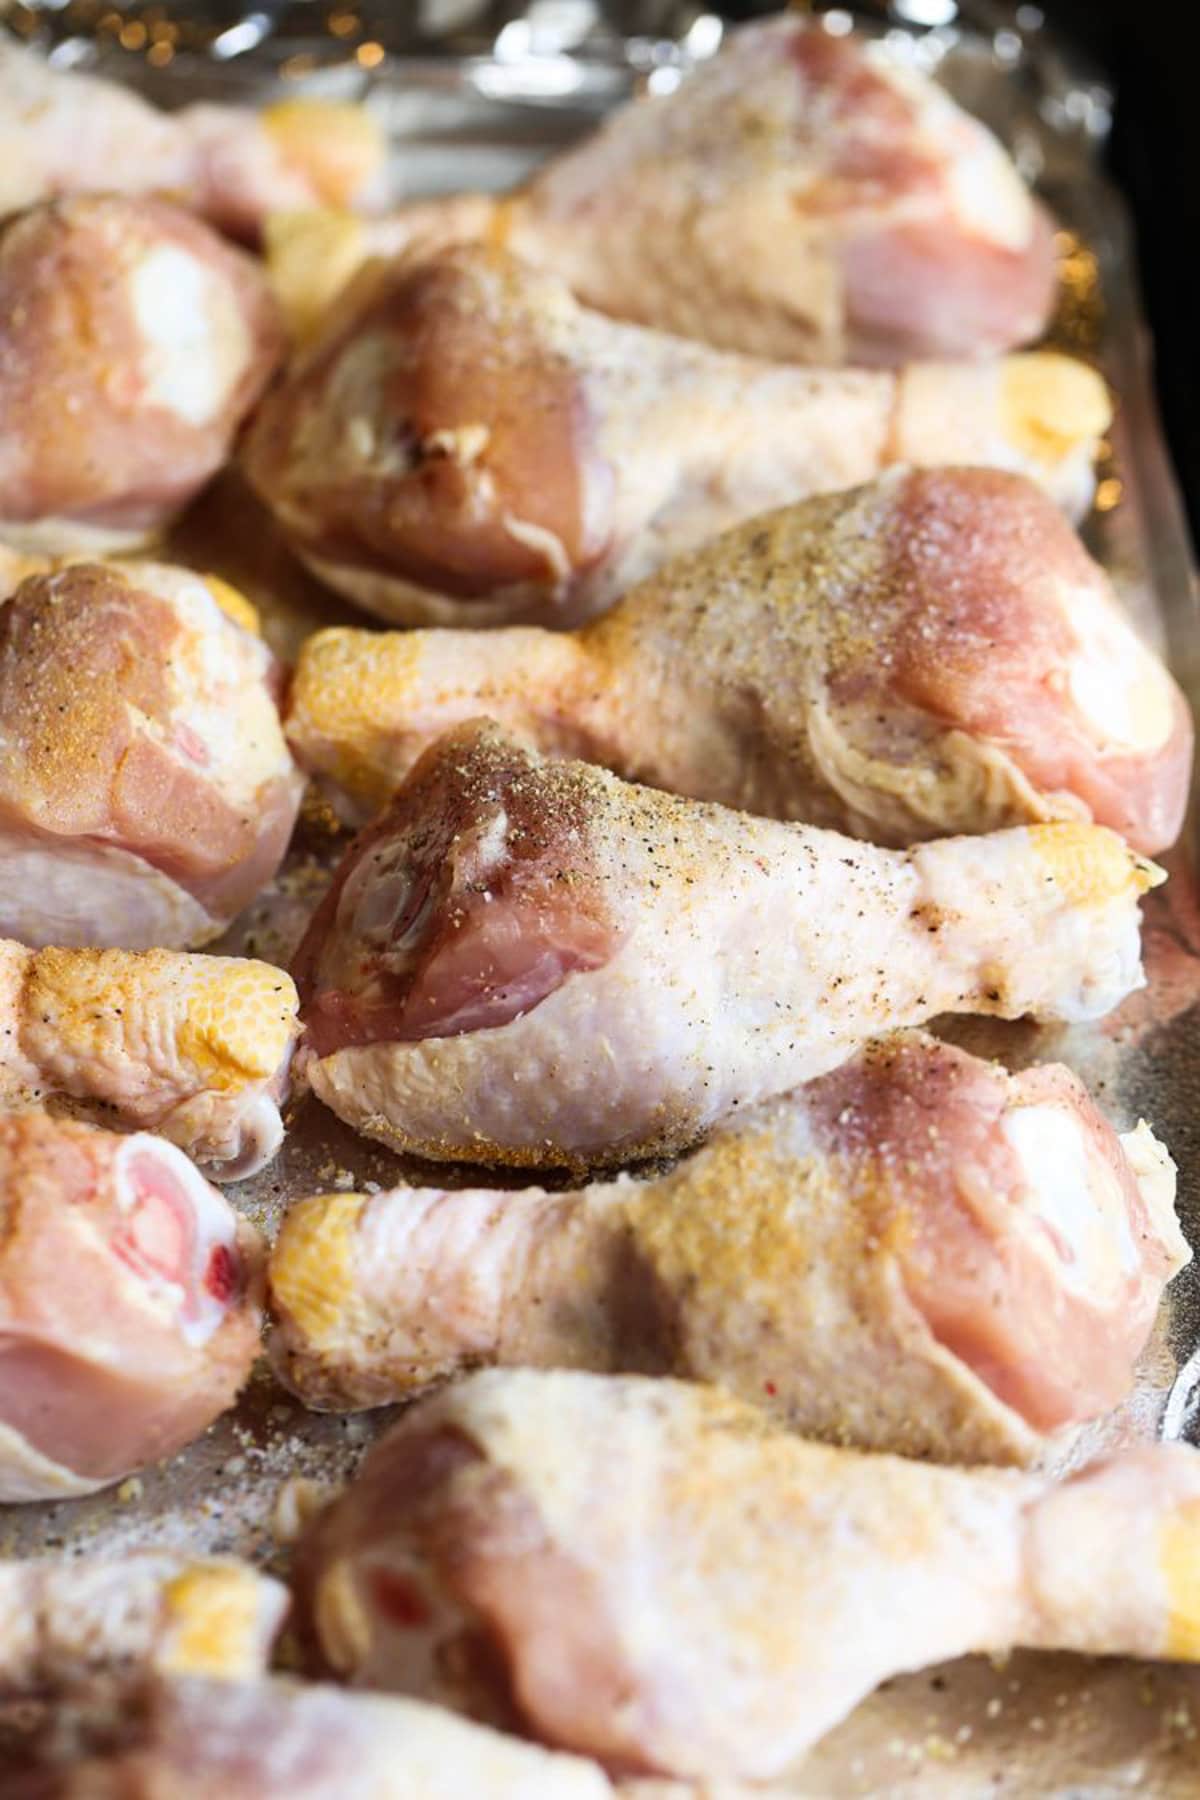 Seasoned chicken legs ready to be baked